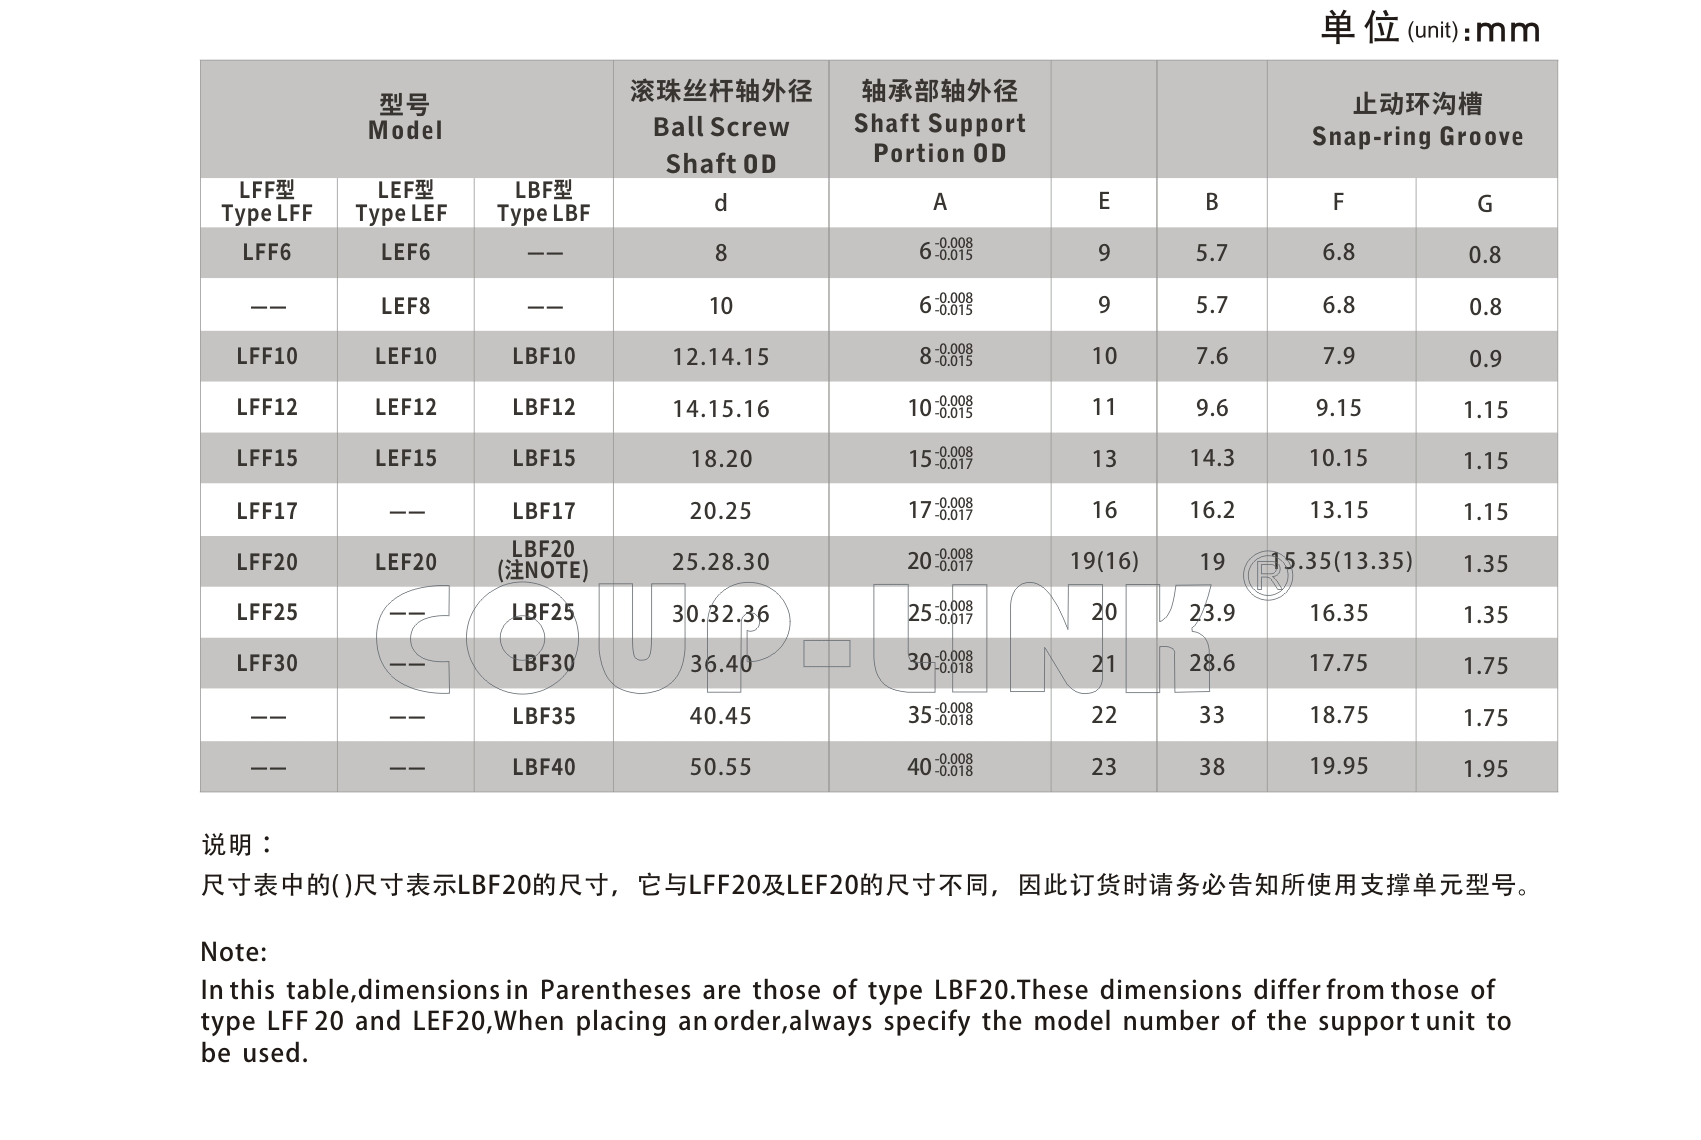 LFF 支撐側_聯軸器種類-廣州菱科自動化設備有限公司